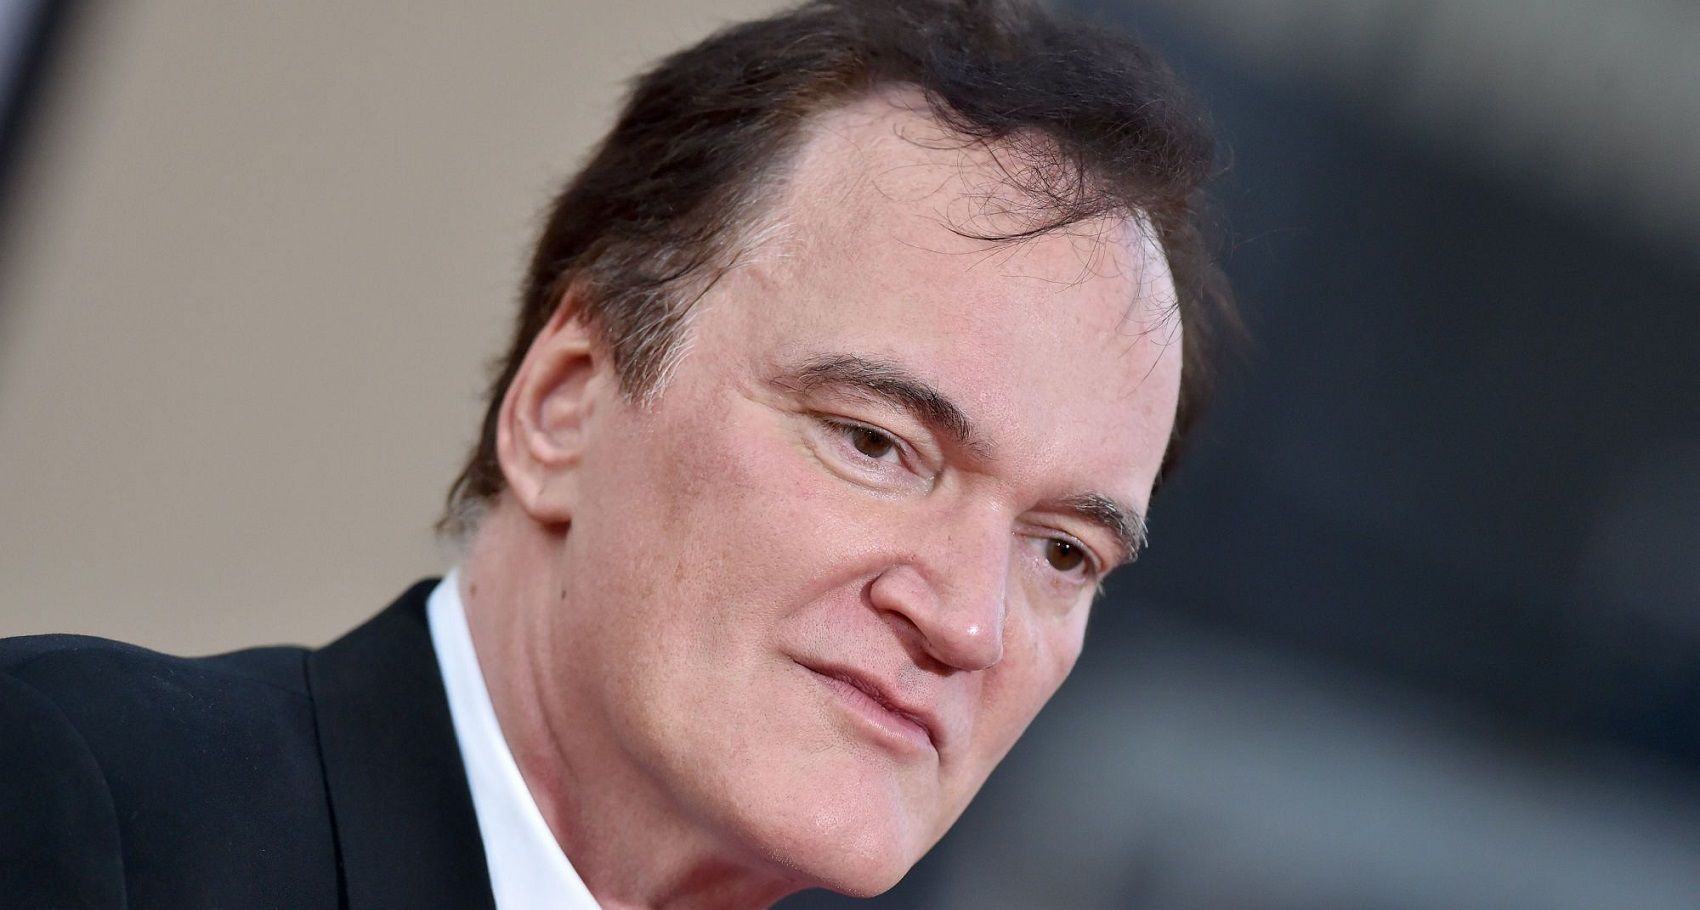 Quentin Tarantino on a red carpet